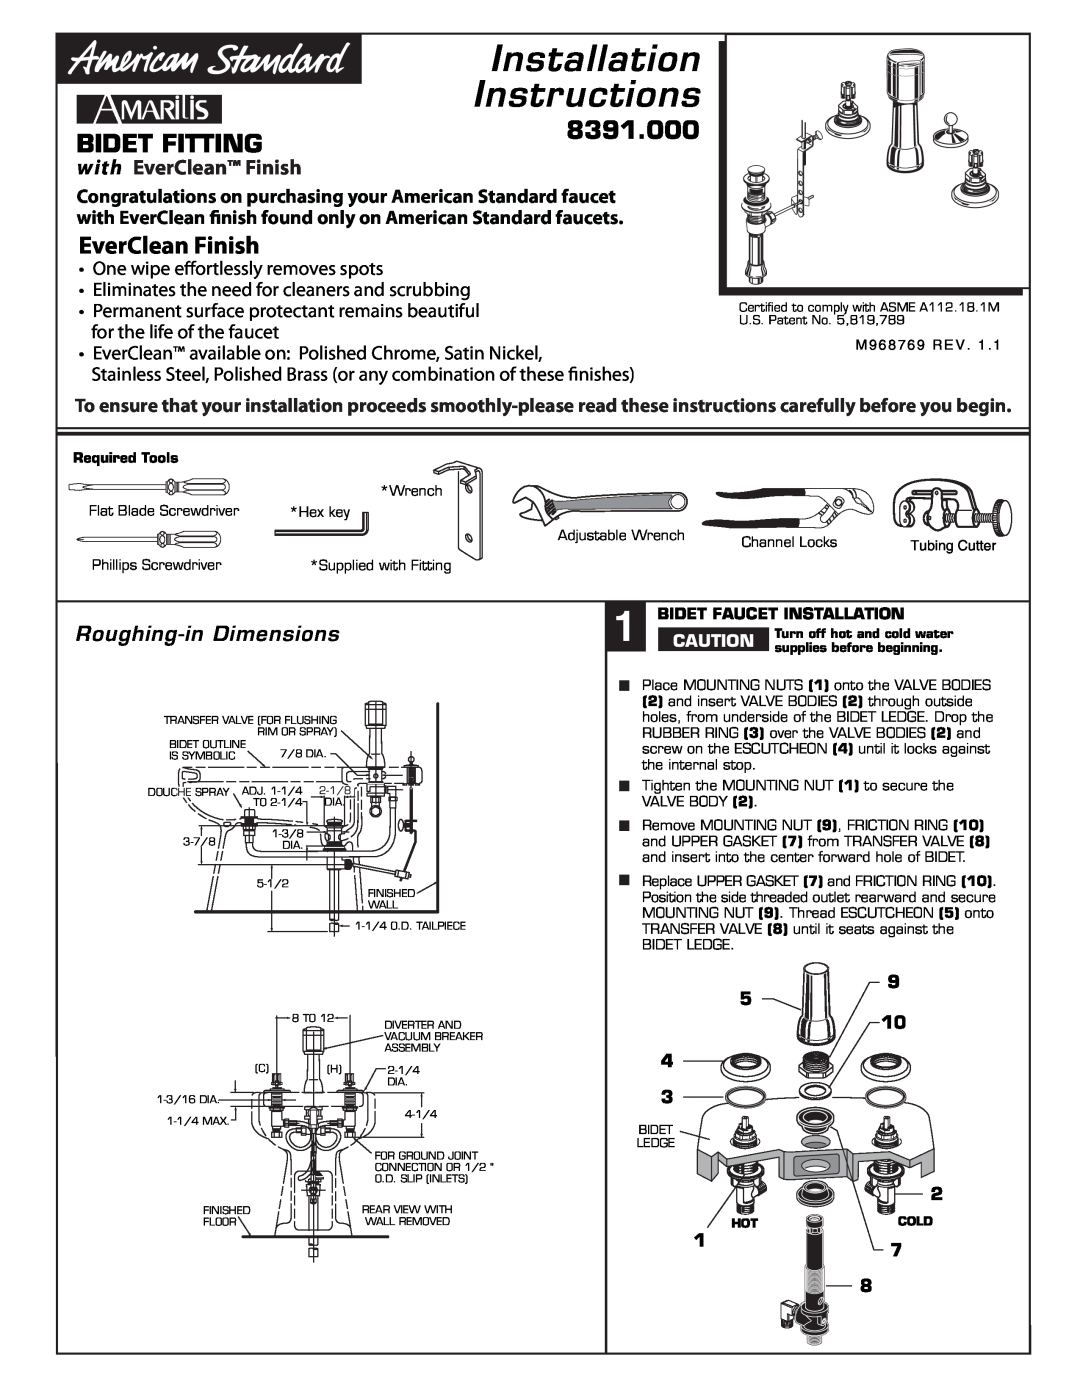 American Standard 8391.000 installation instructions Installation Instructions, Bidet Fitting, EverClean Finish 